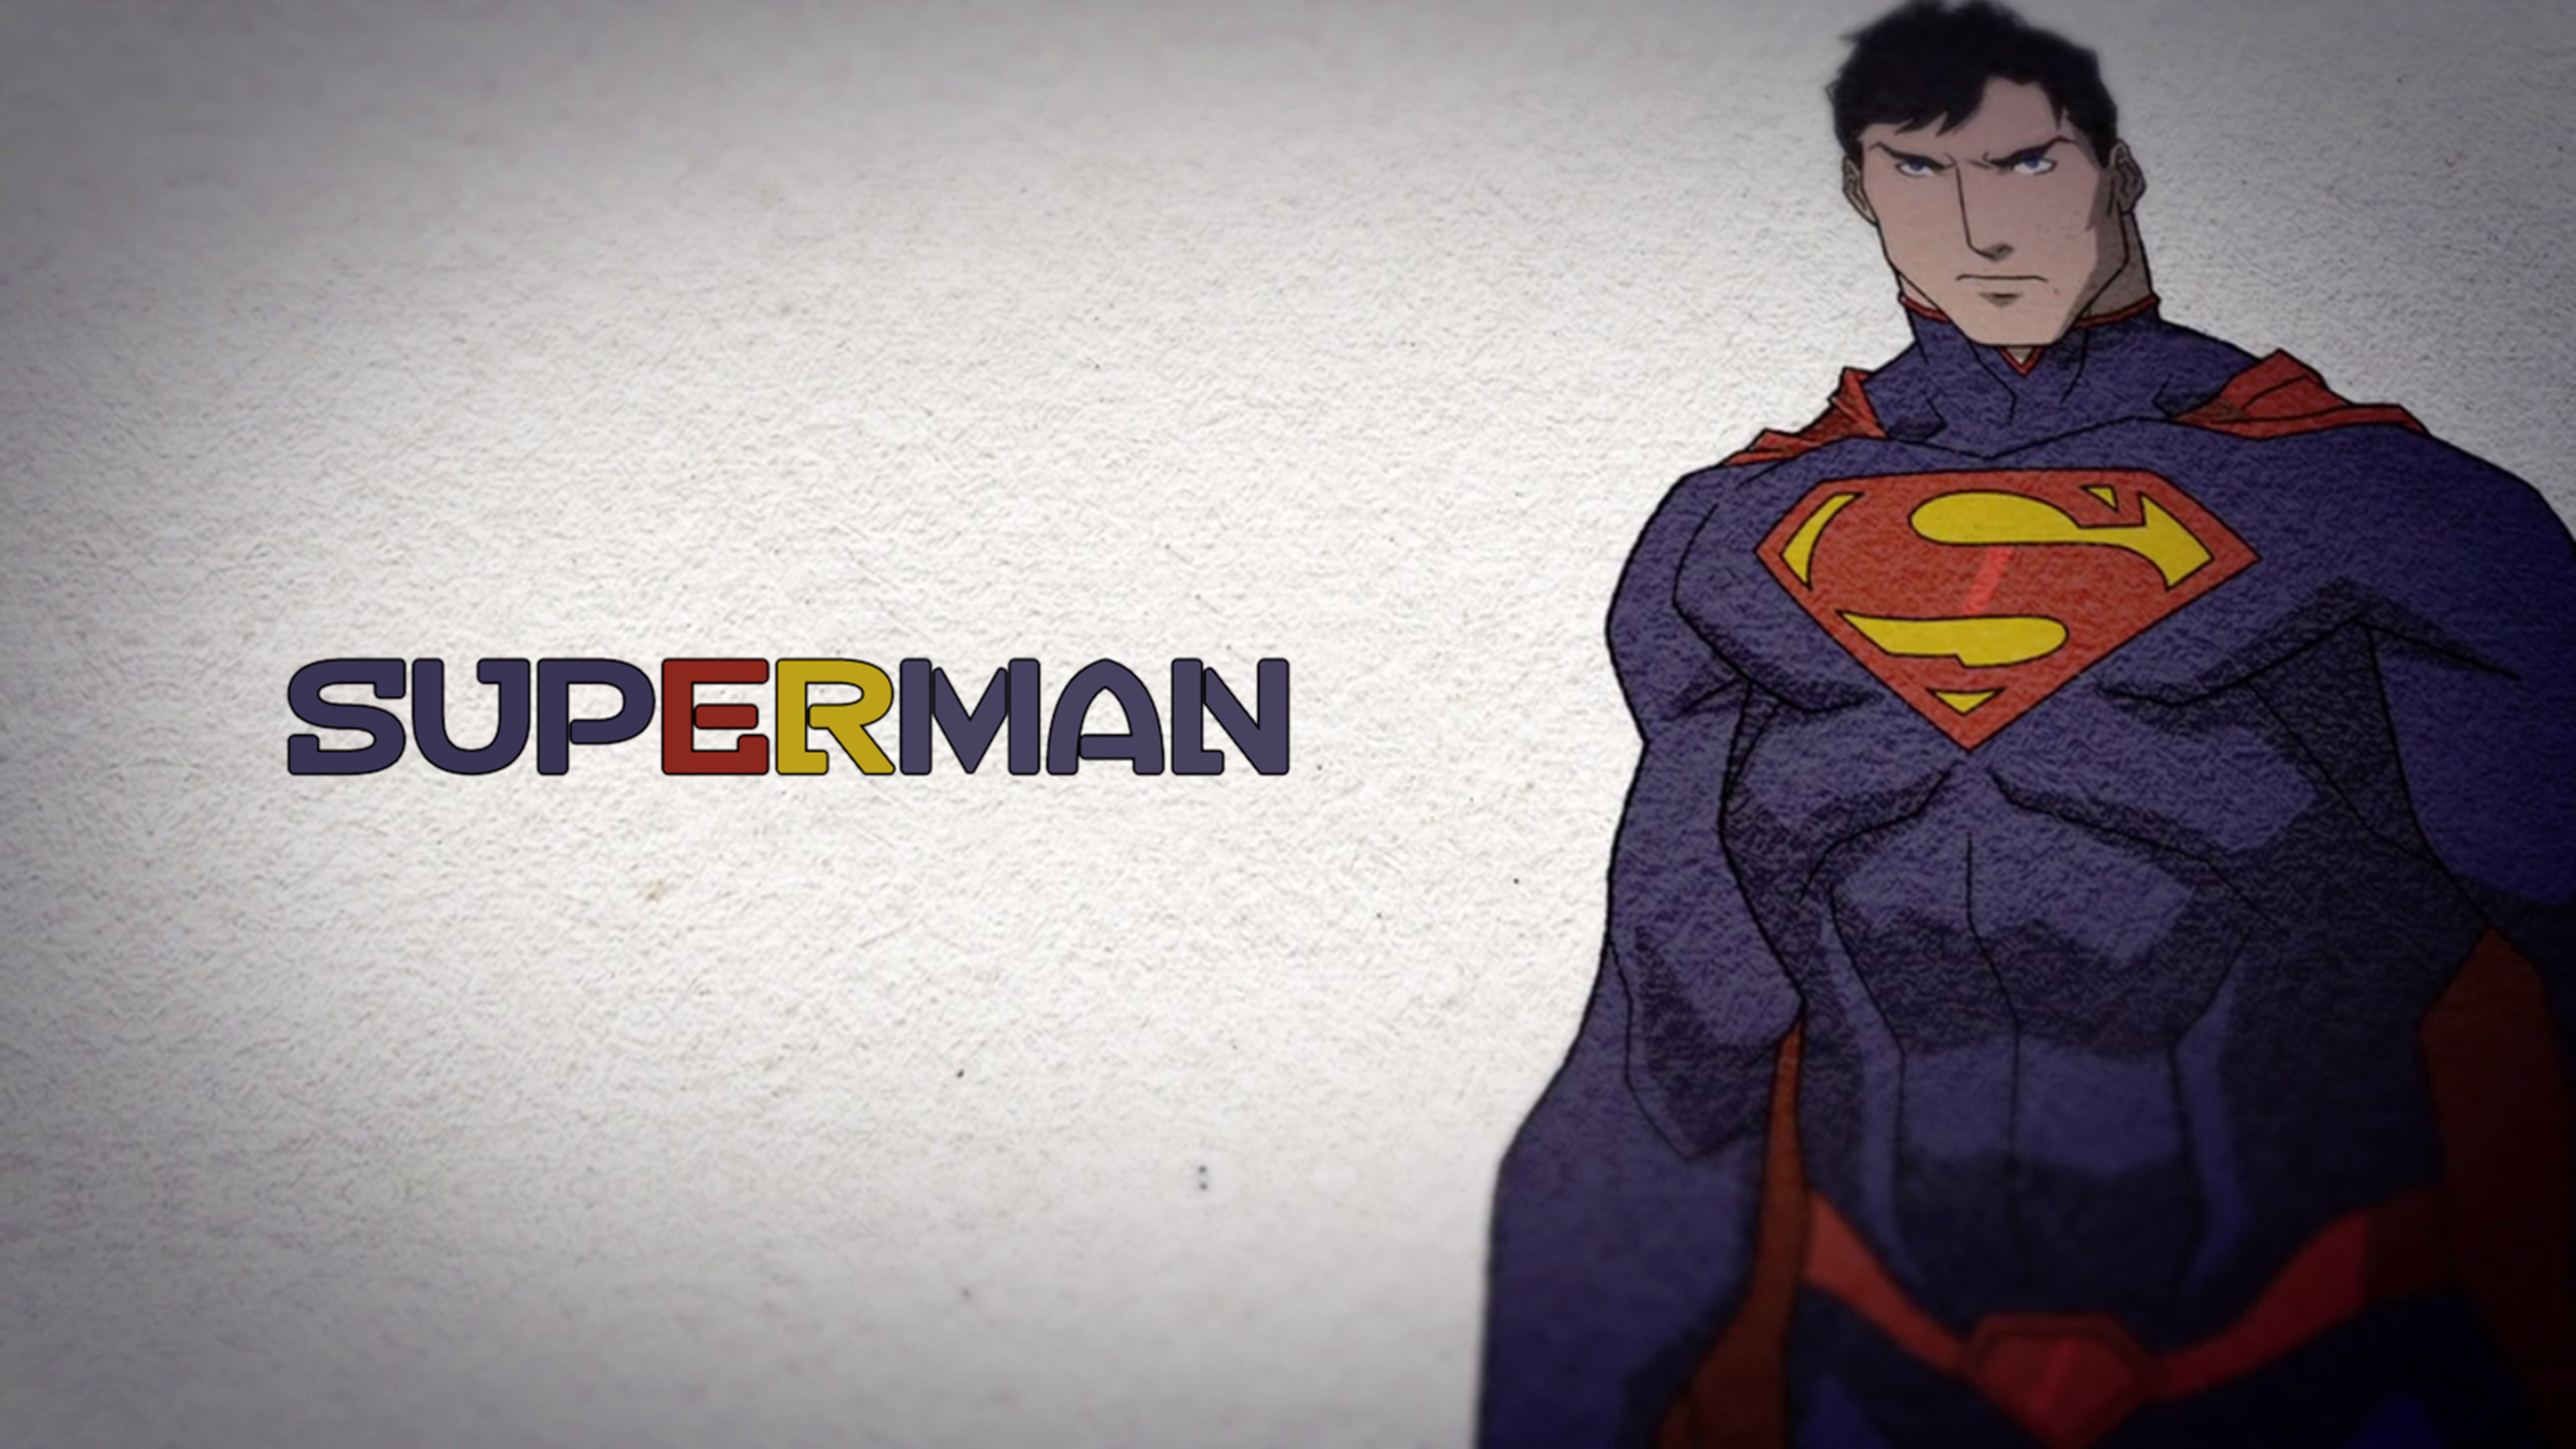 Superman DC Comics Superhero 5K